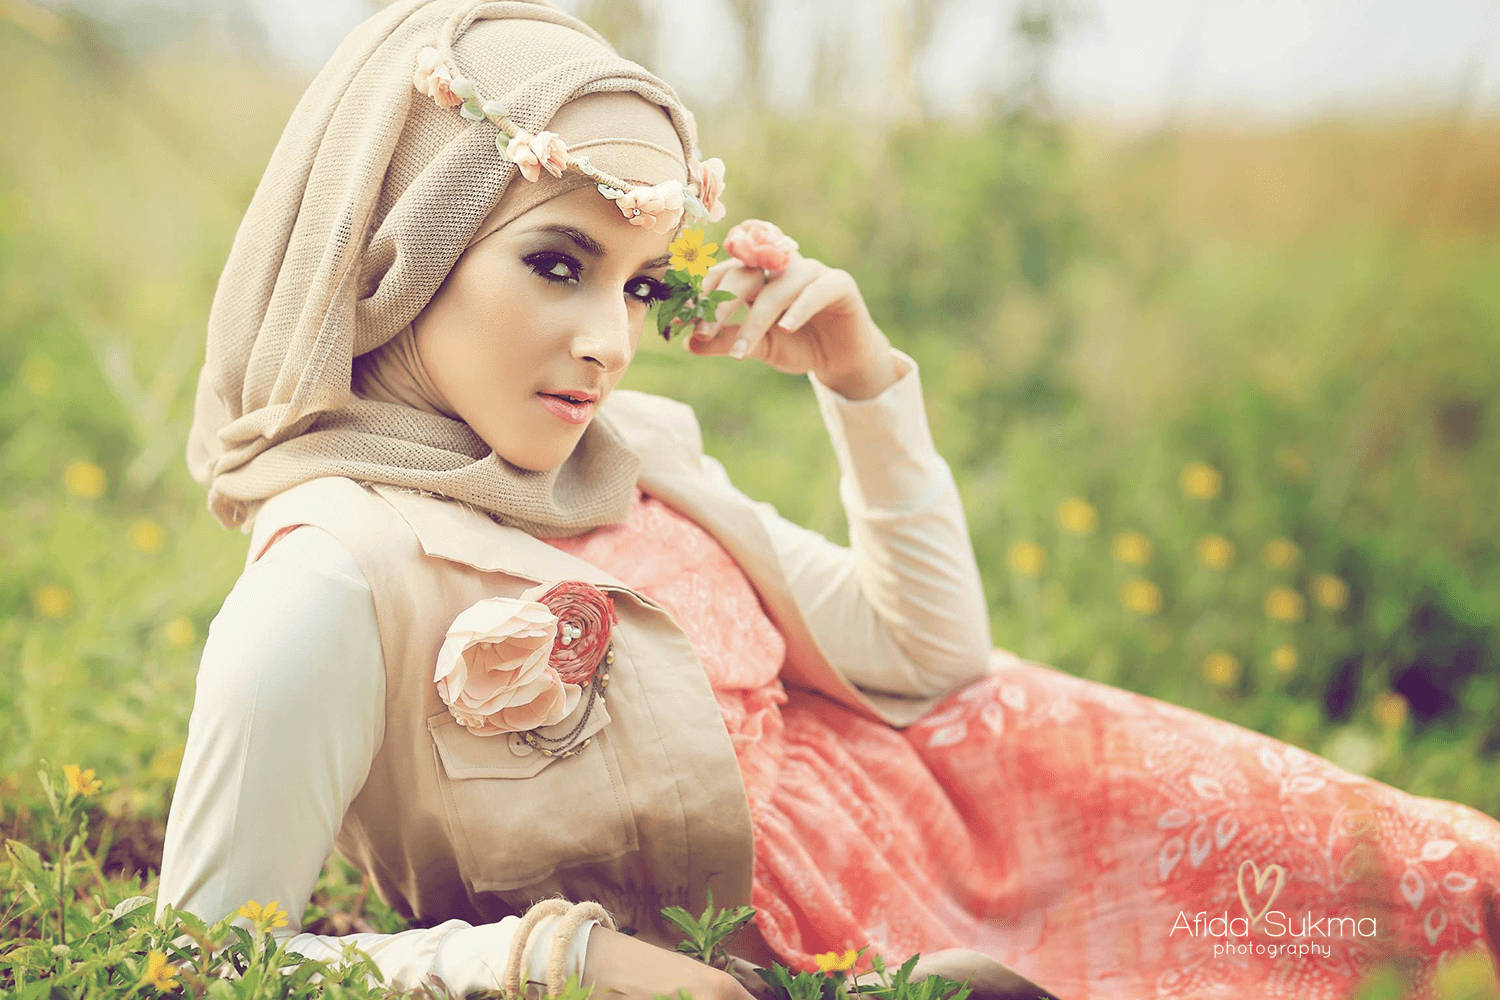 Hijab Girl With Flowers